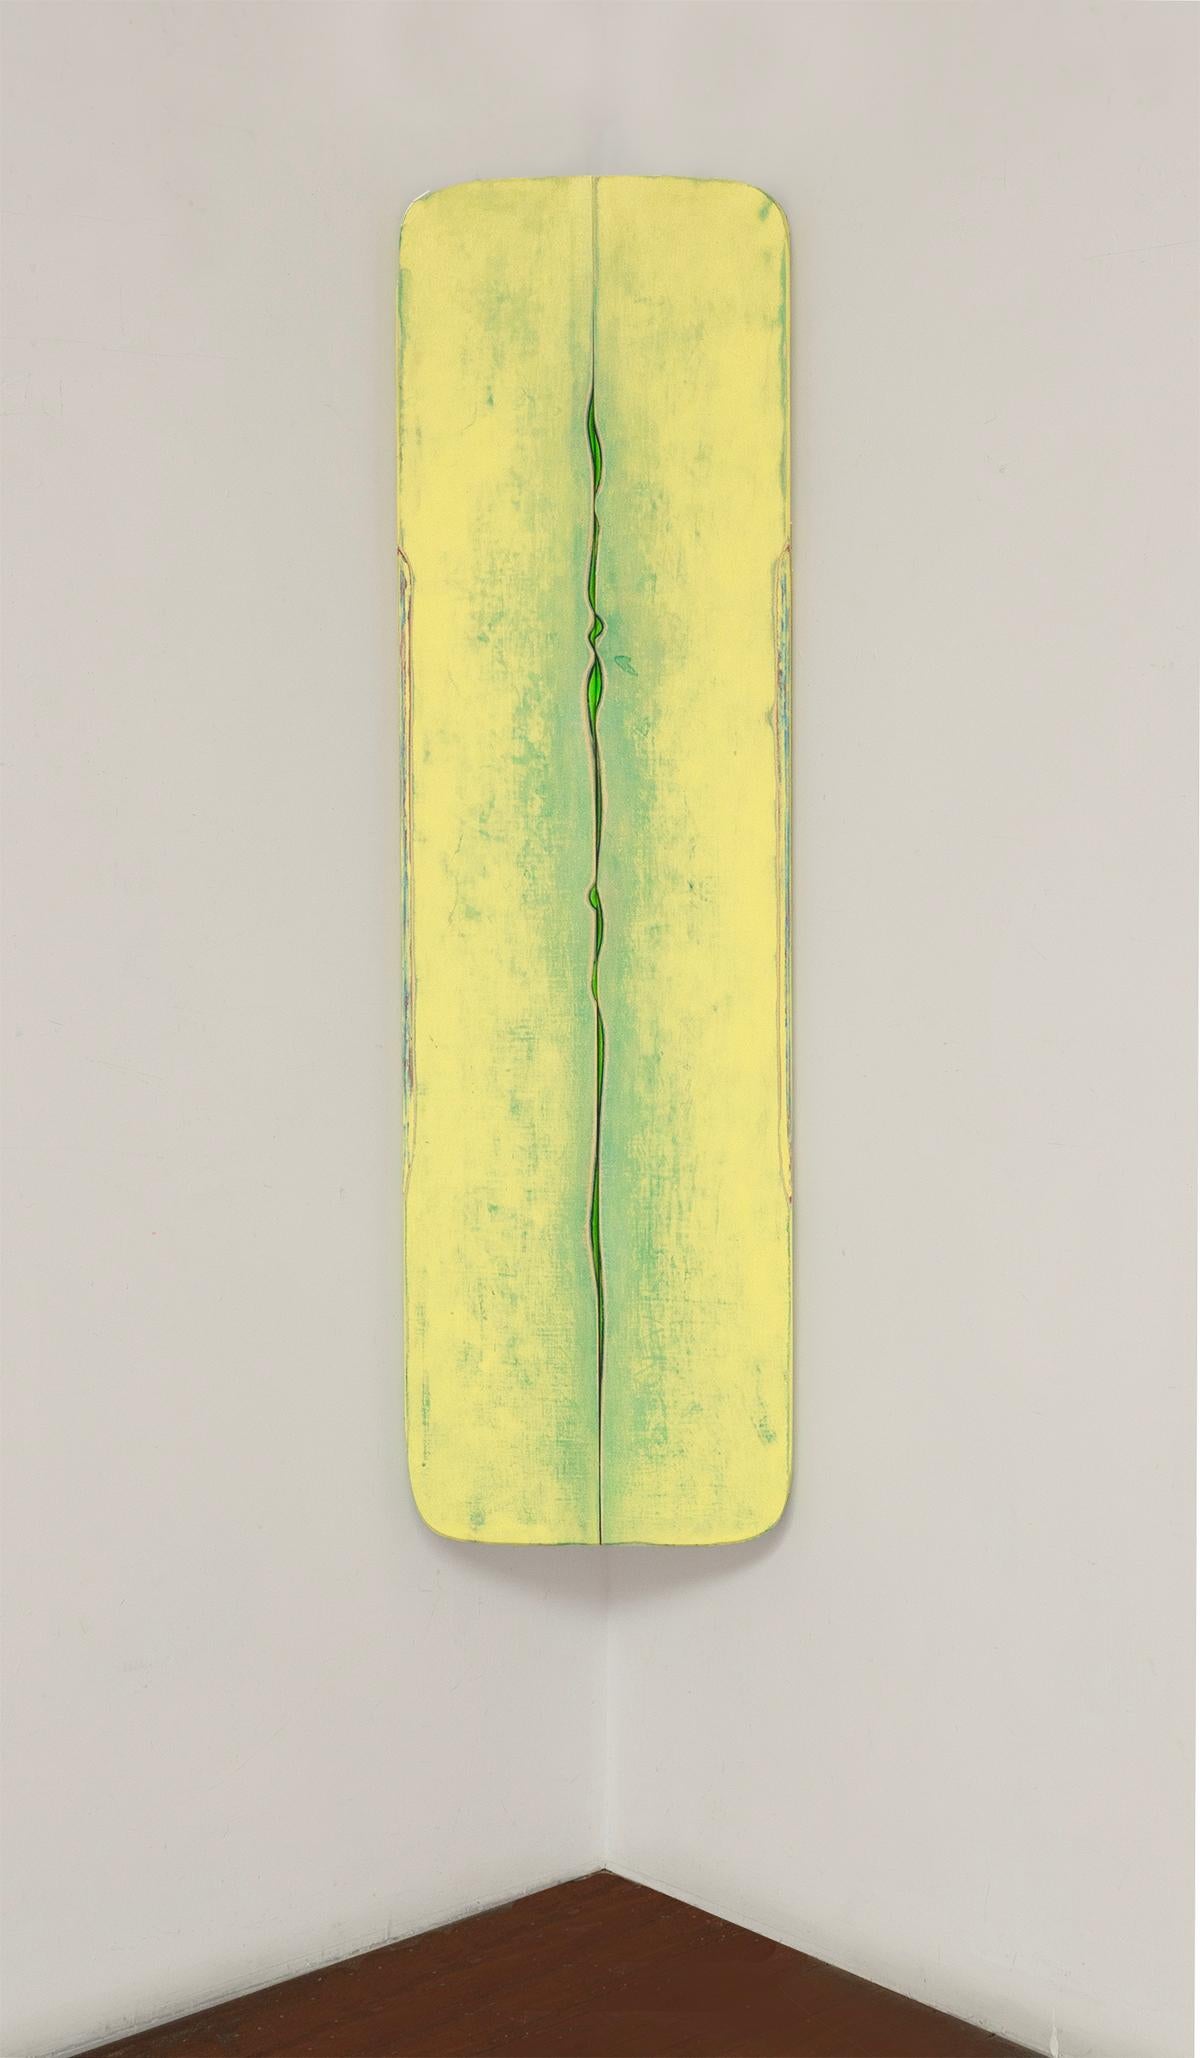 Peinture sculpturale d'angle jaune pâle, vert vif, irisée sur bois - Mixed Media Art de Robert Yasuda